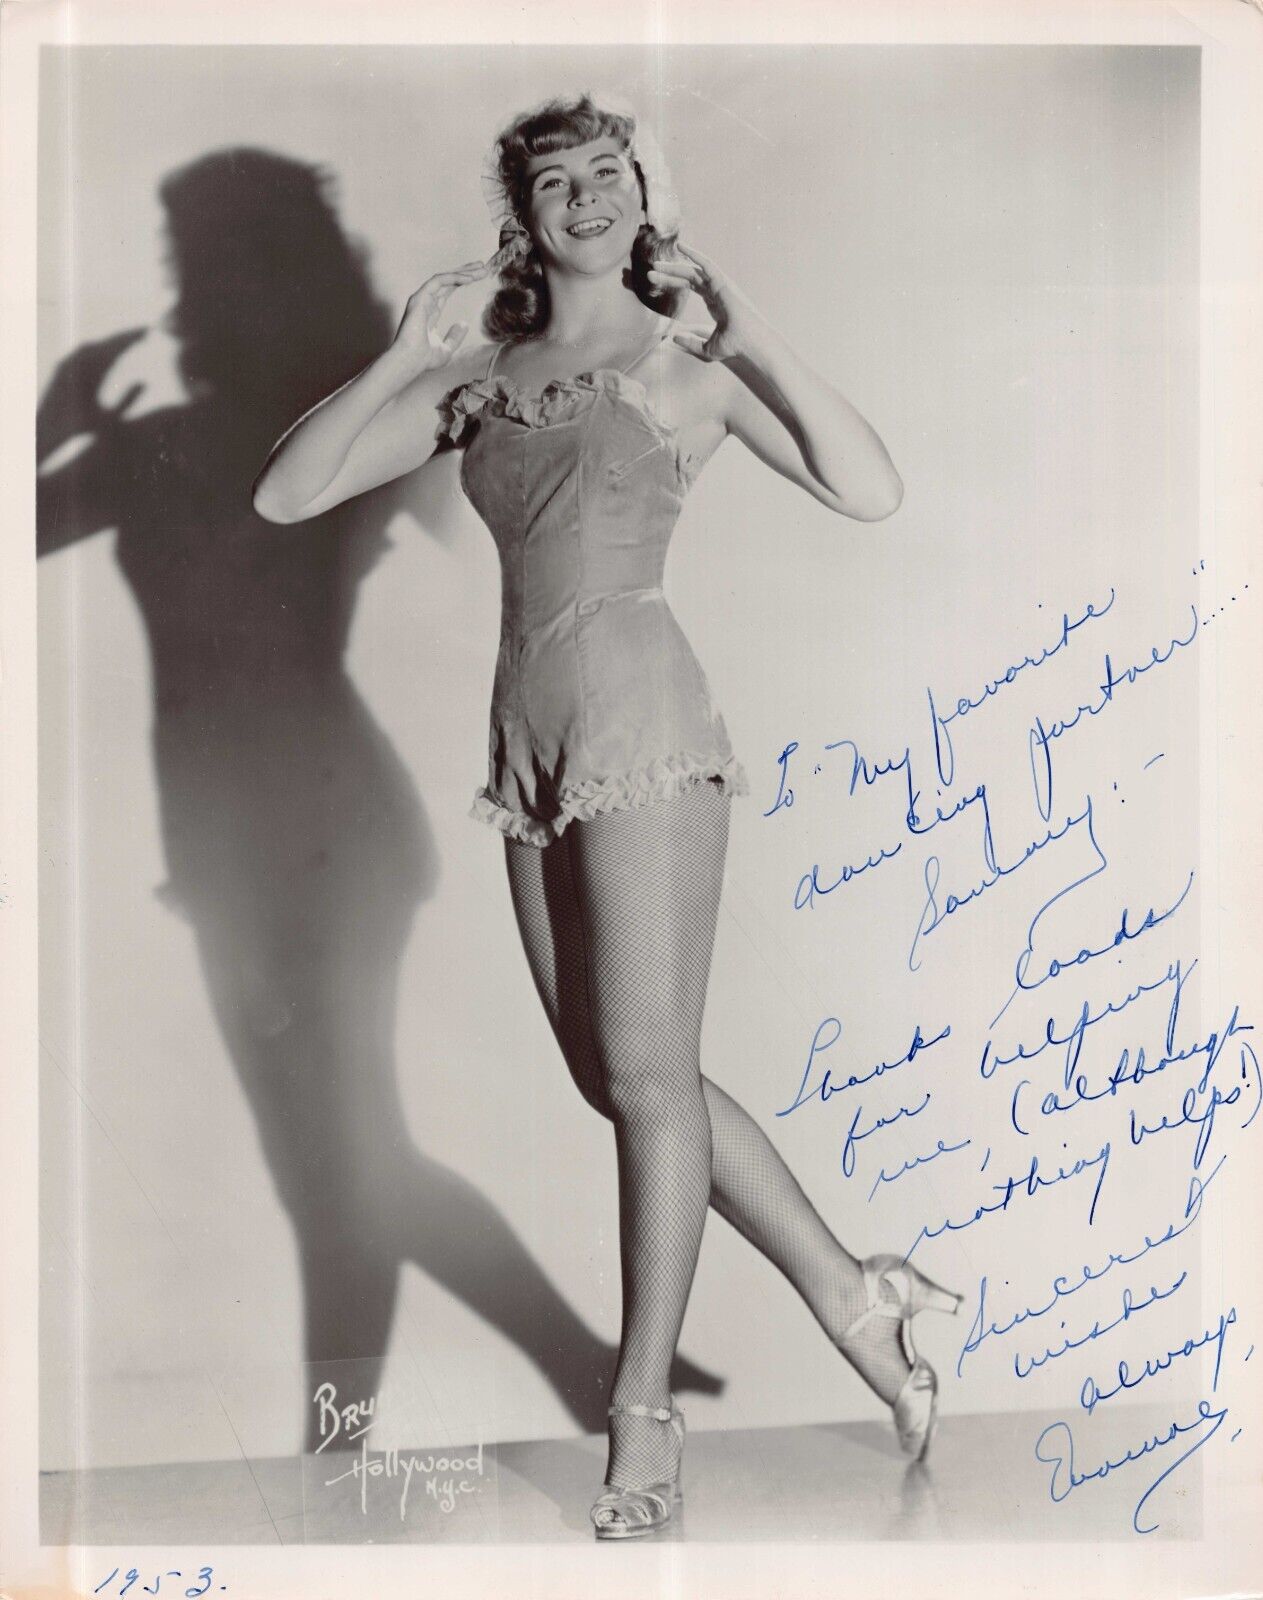 1953 Nightclub Performer Dancer Costume Tap Shoes B&W 8x10 Headshot Signed